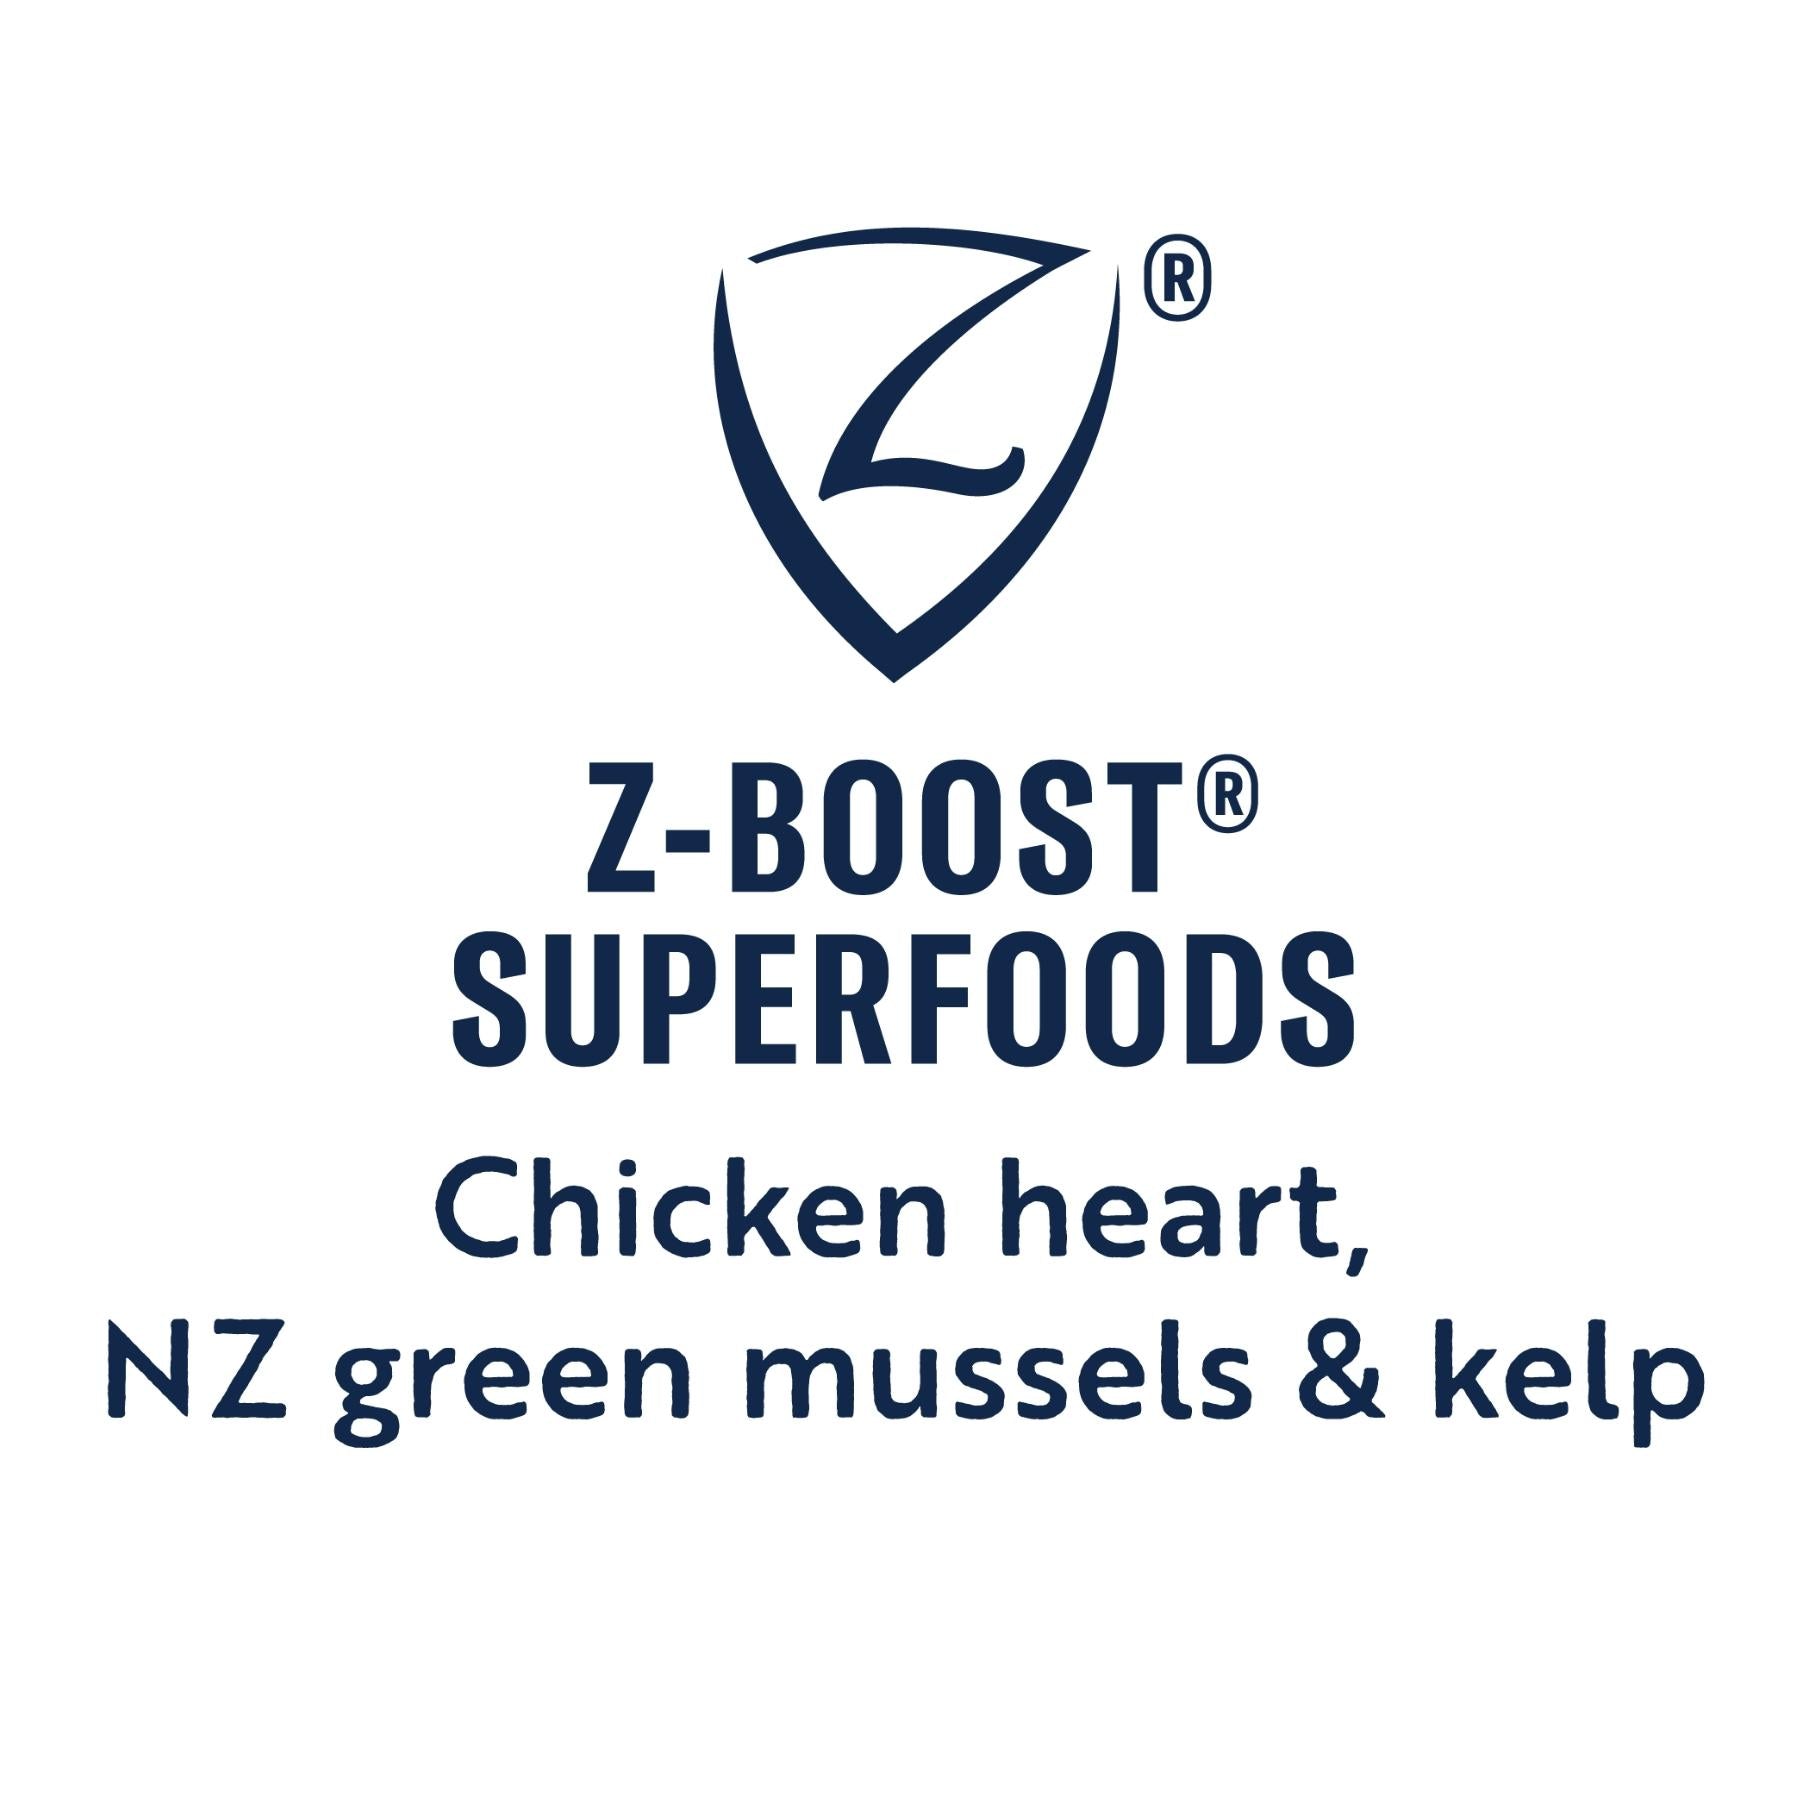 Z-Boost Superfoods - Chicken heart, NZ green mussels and kelp.